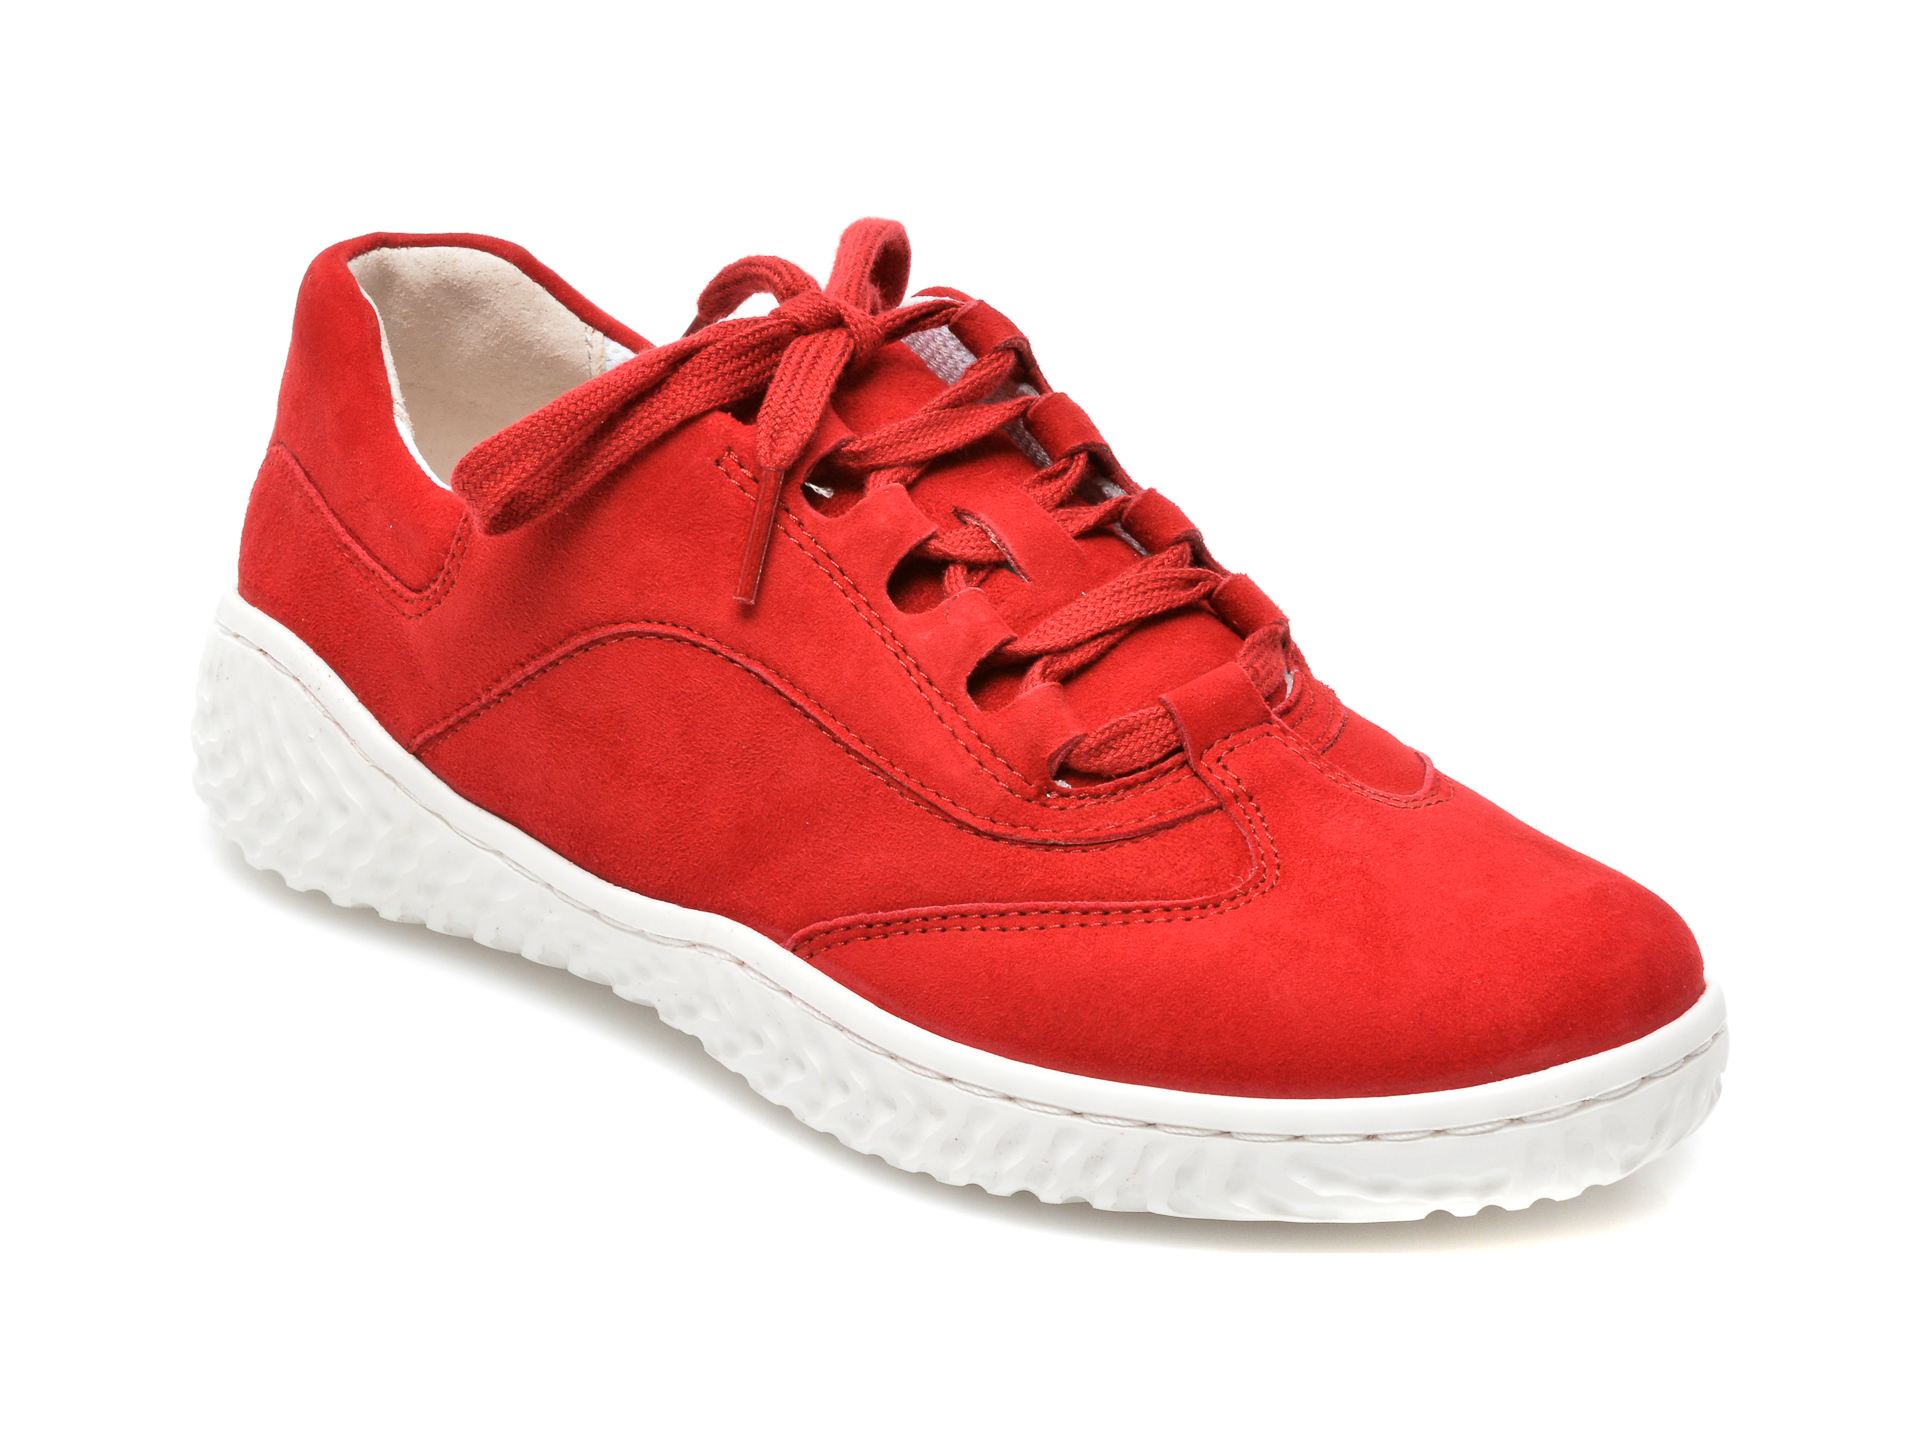 Pantofi GABOR rosii, 43380, din piele intoarsa Gabor Gabor